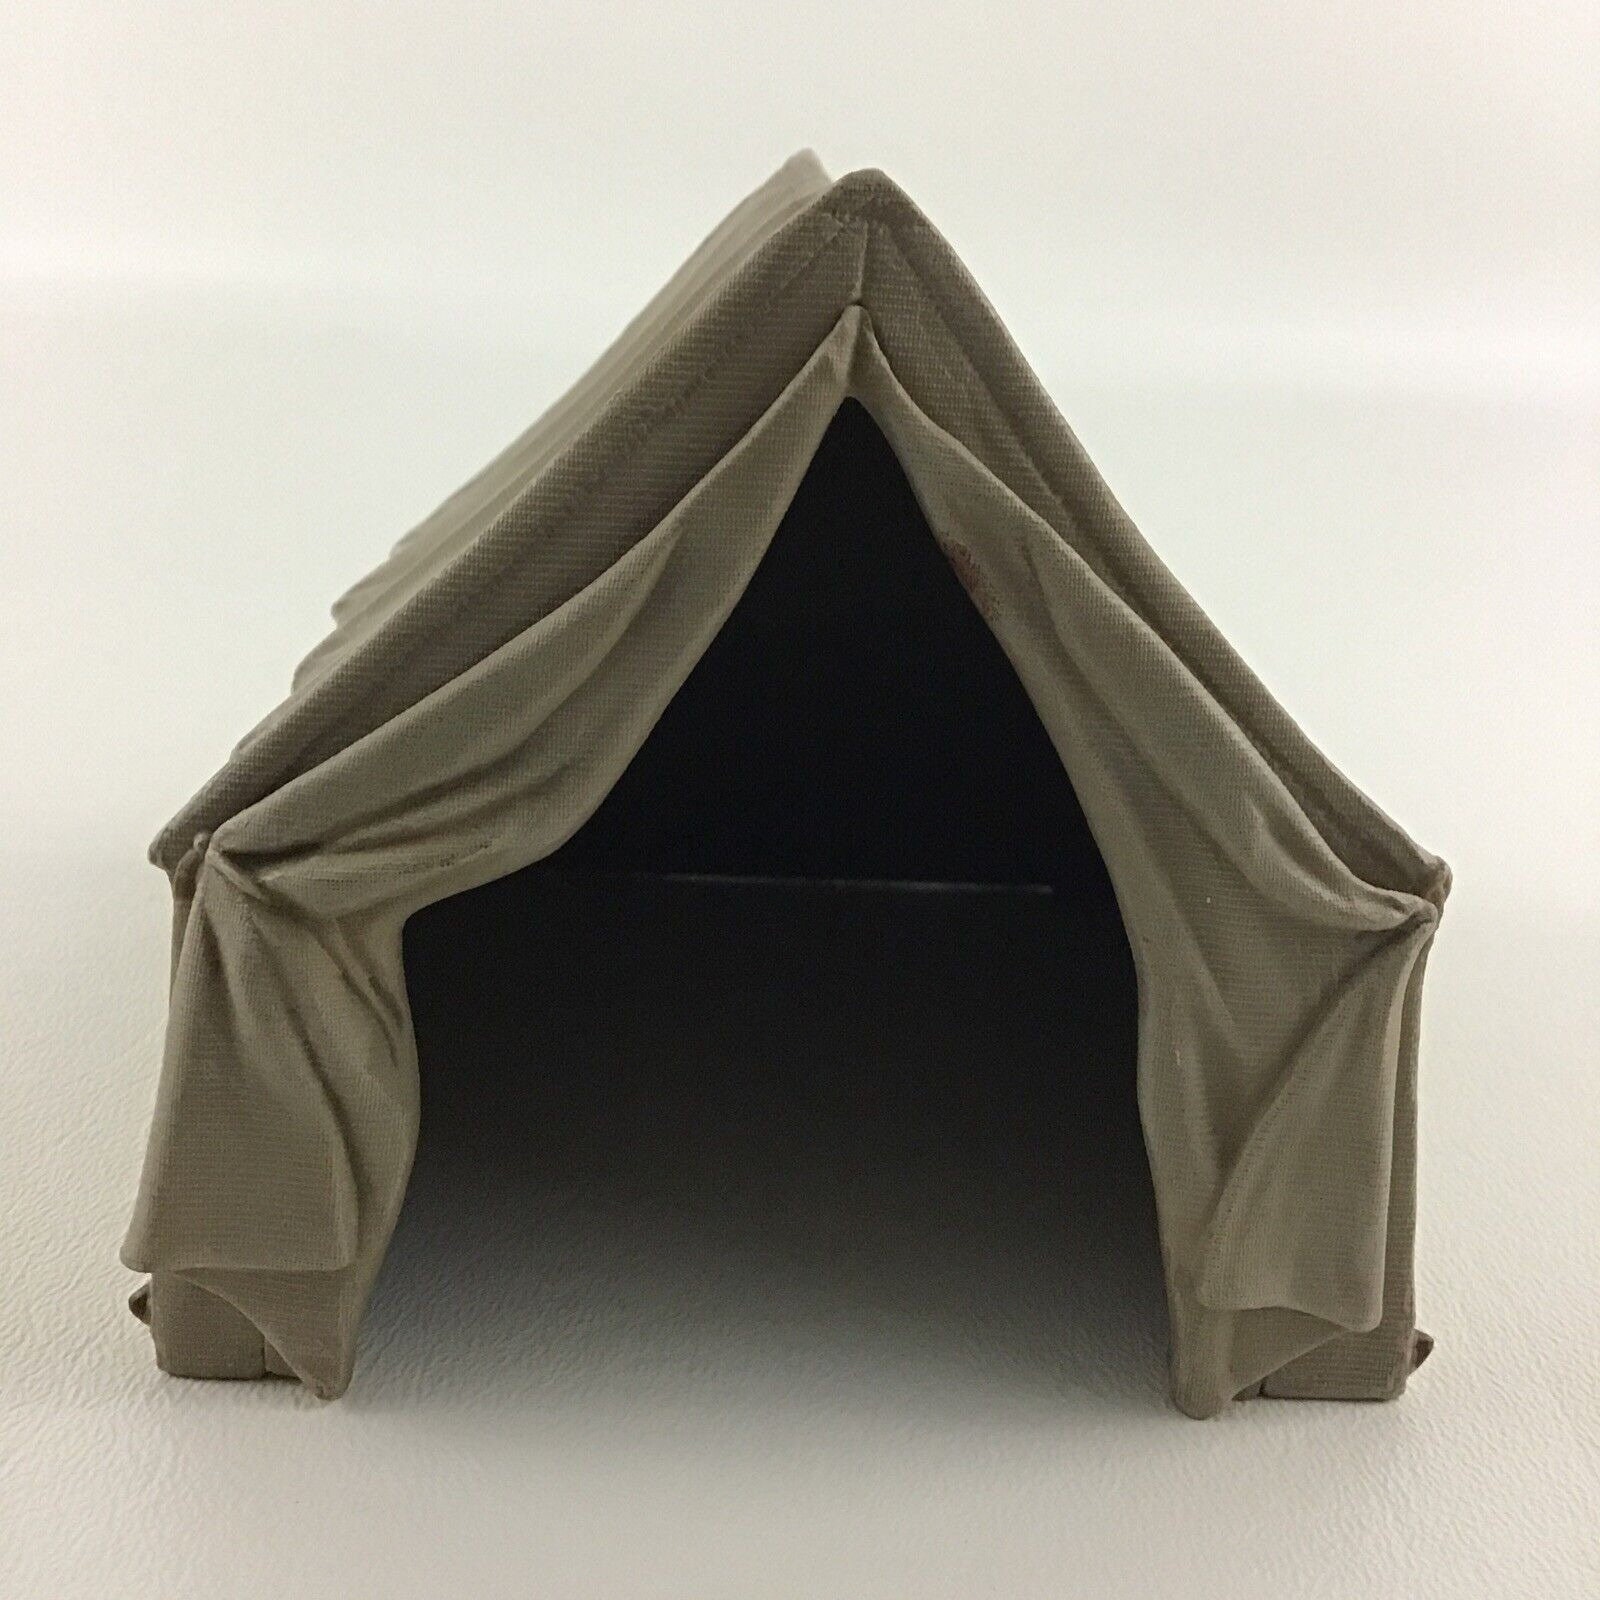 G.I.Joe Army Stores - British Army 12x12 Canvas Frame Tents - 2